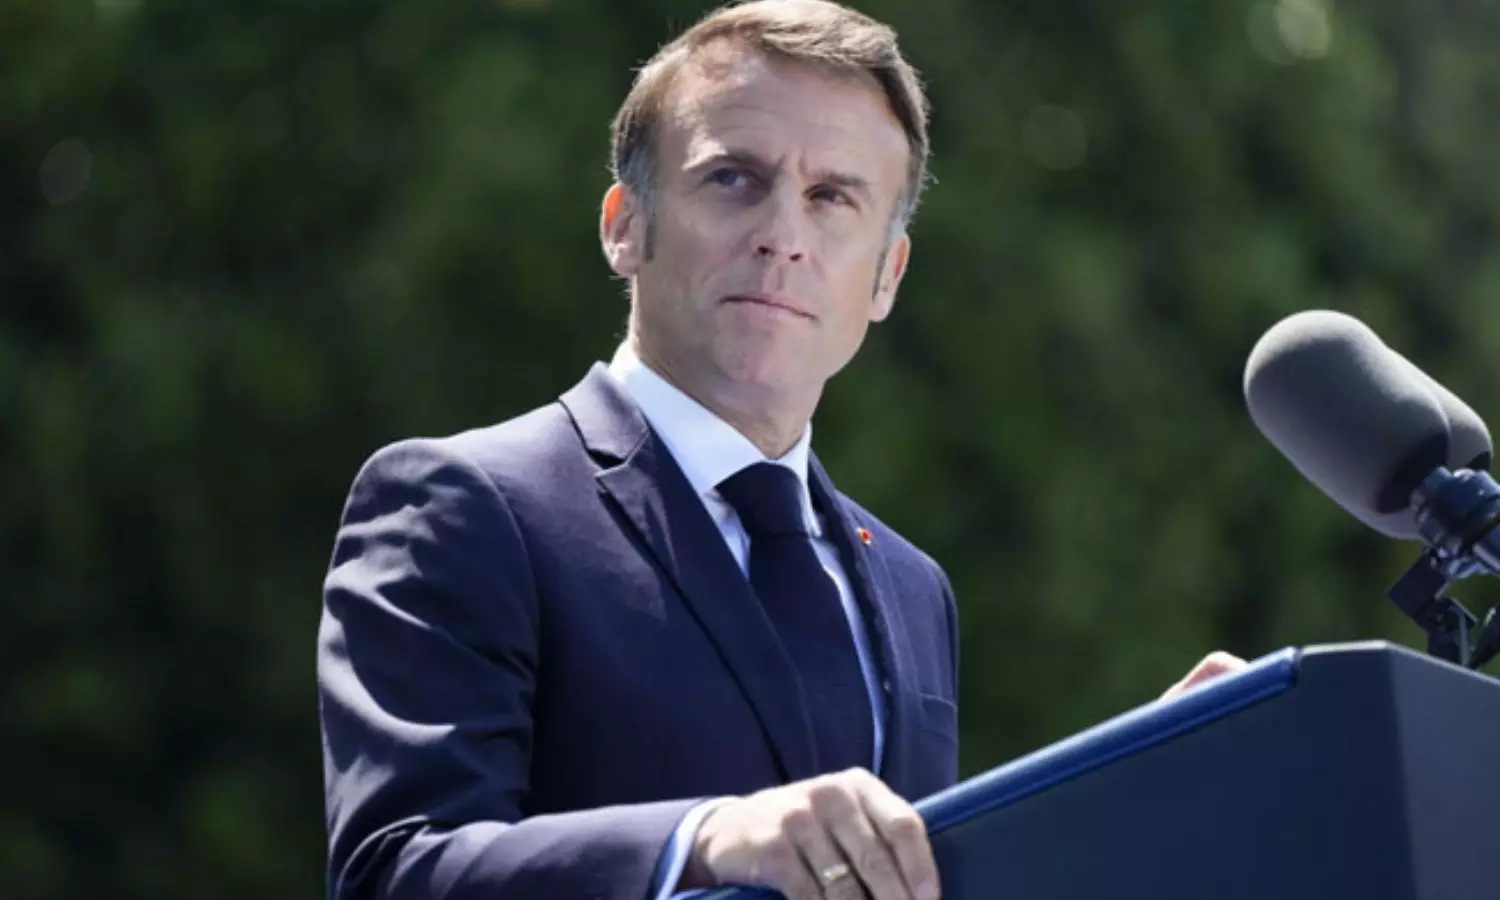 France President Emmanuel Macron unexpected decision